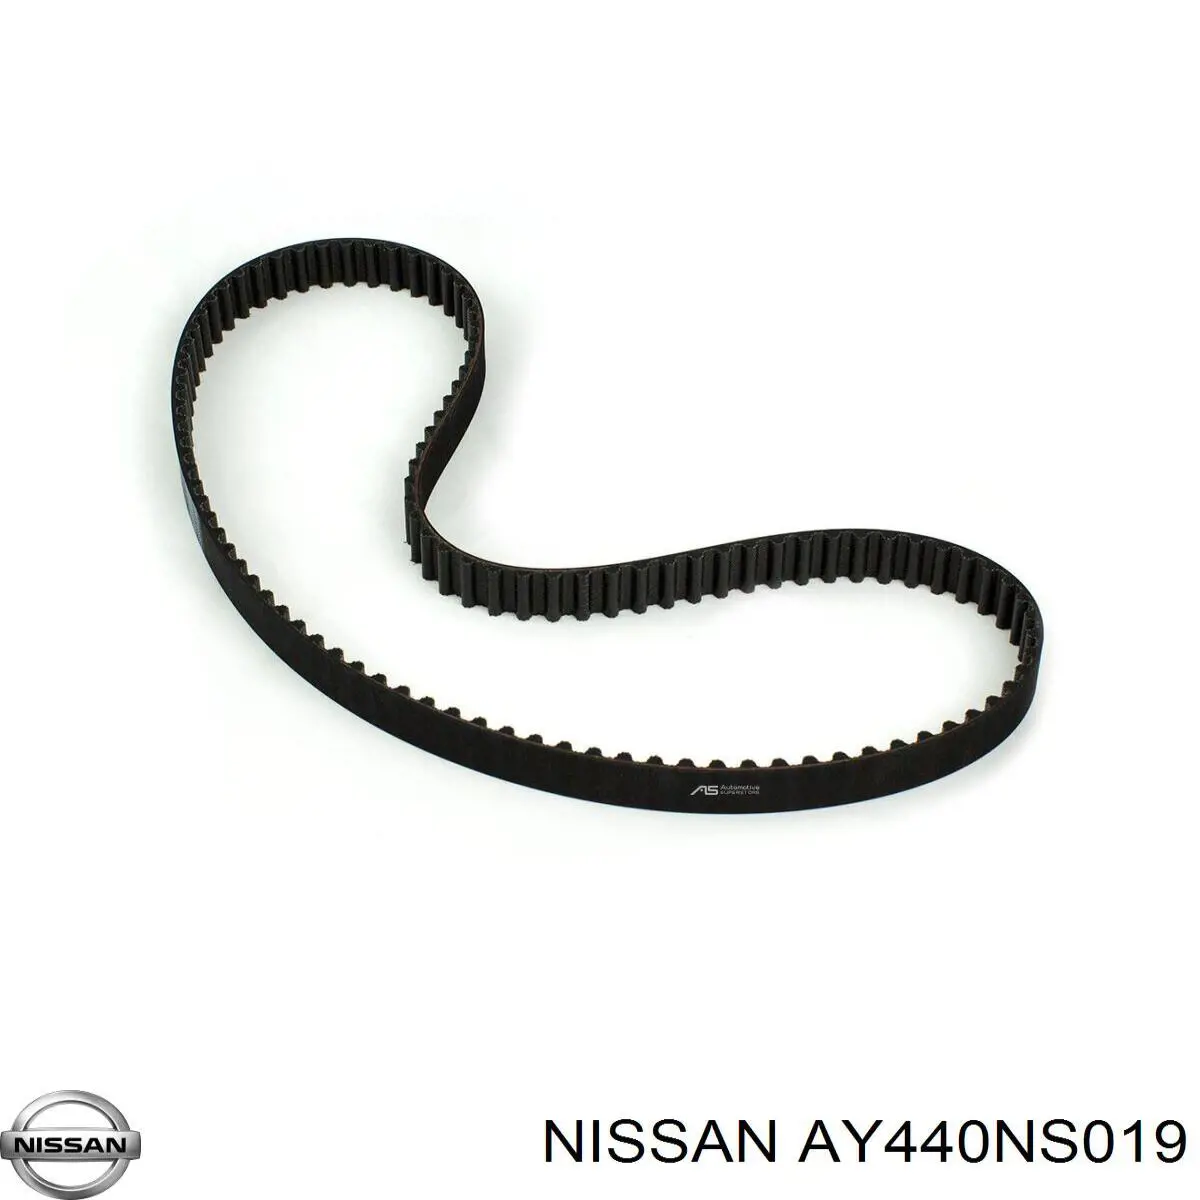 AY440NS019 Nissan ремень грм